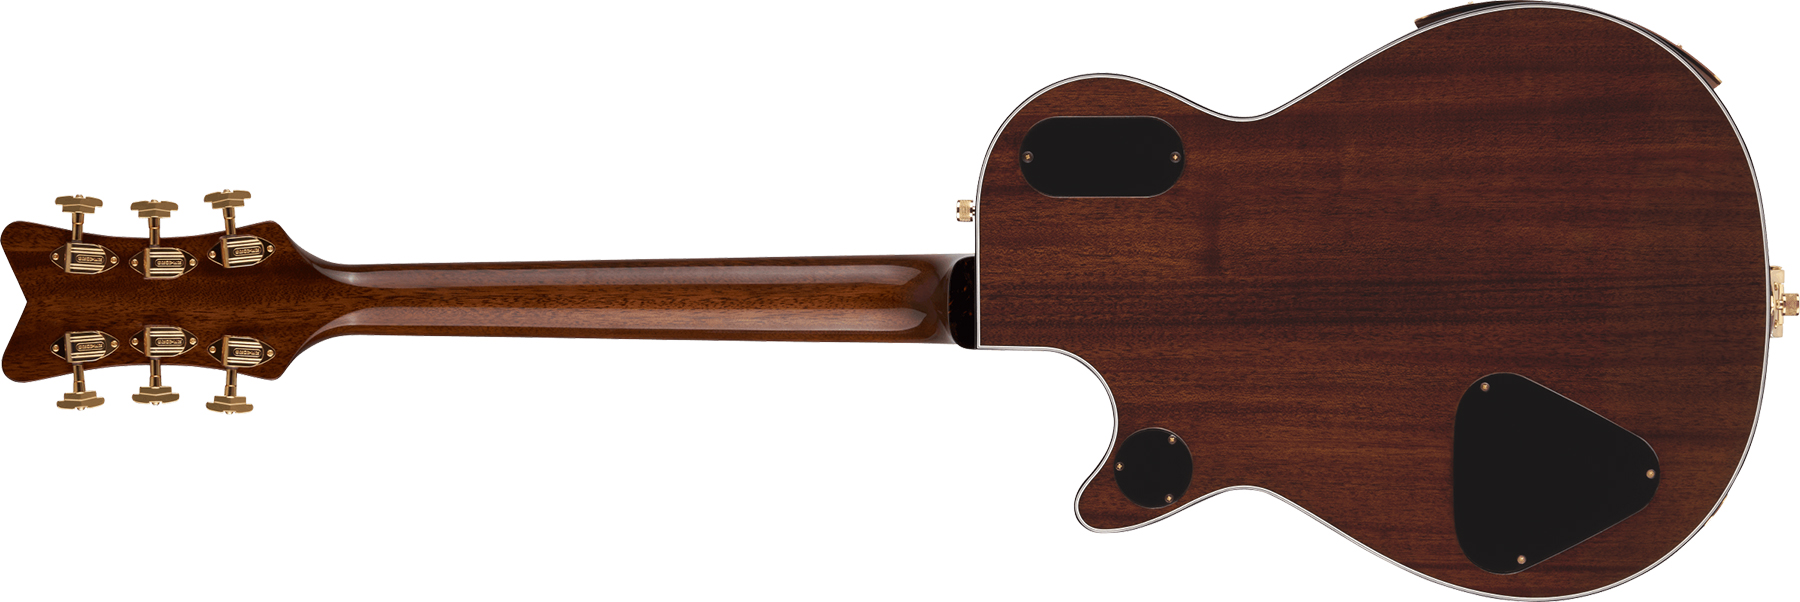 Gretsch G6134t-ltd Penguin Koa Bigsby Pro Jap 2h Trem Eb - Natural - Single cut electric guitar - Variation 1